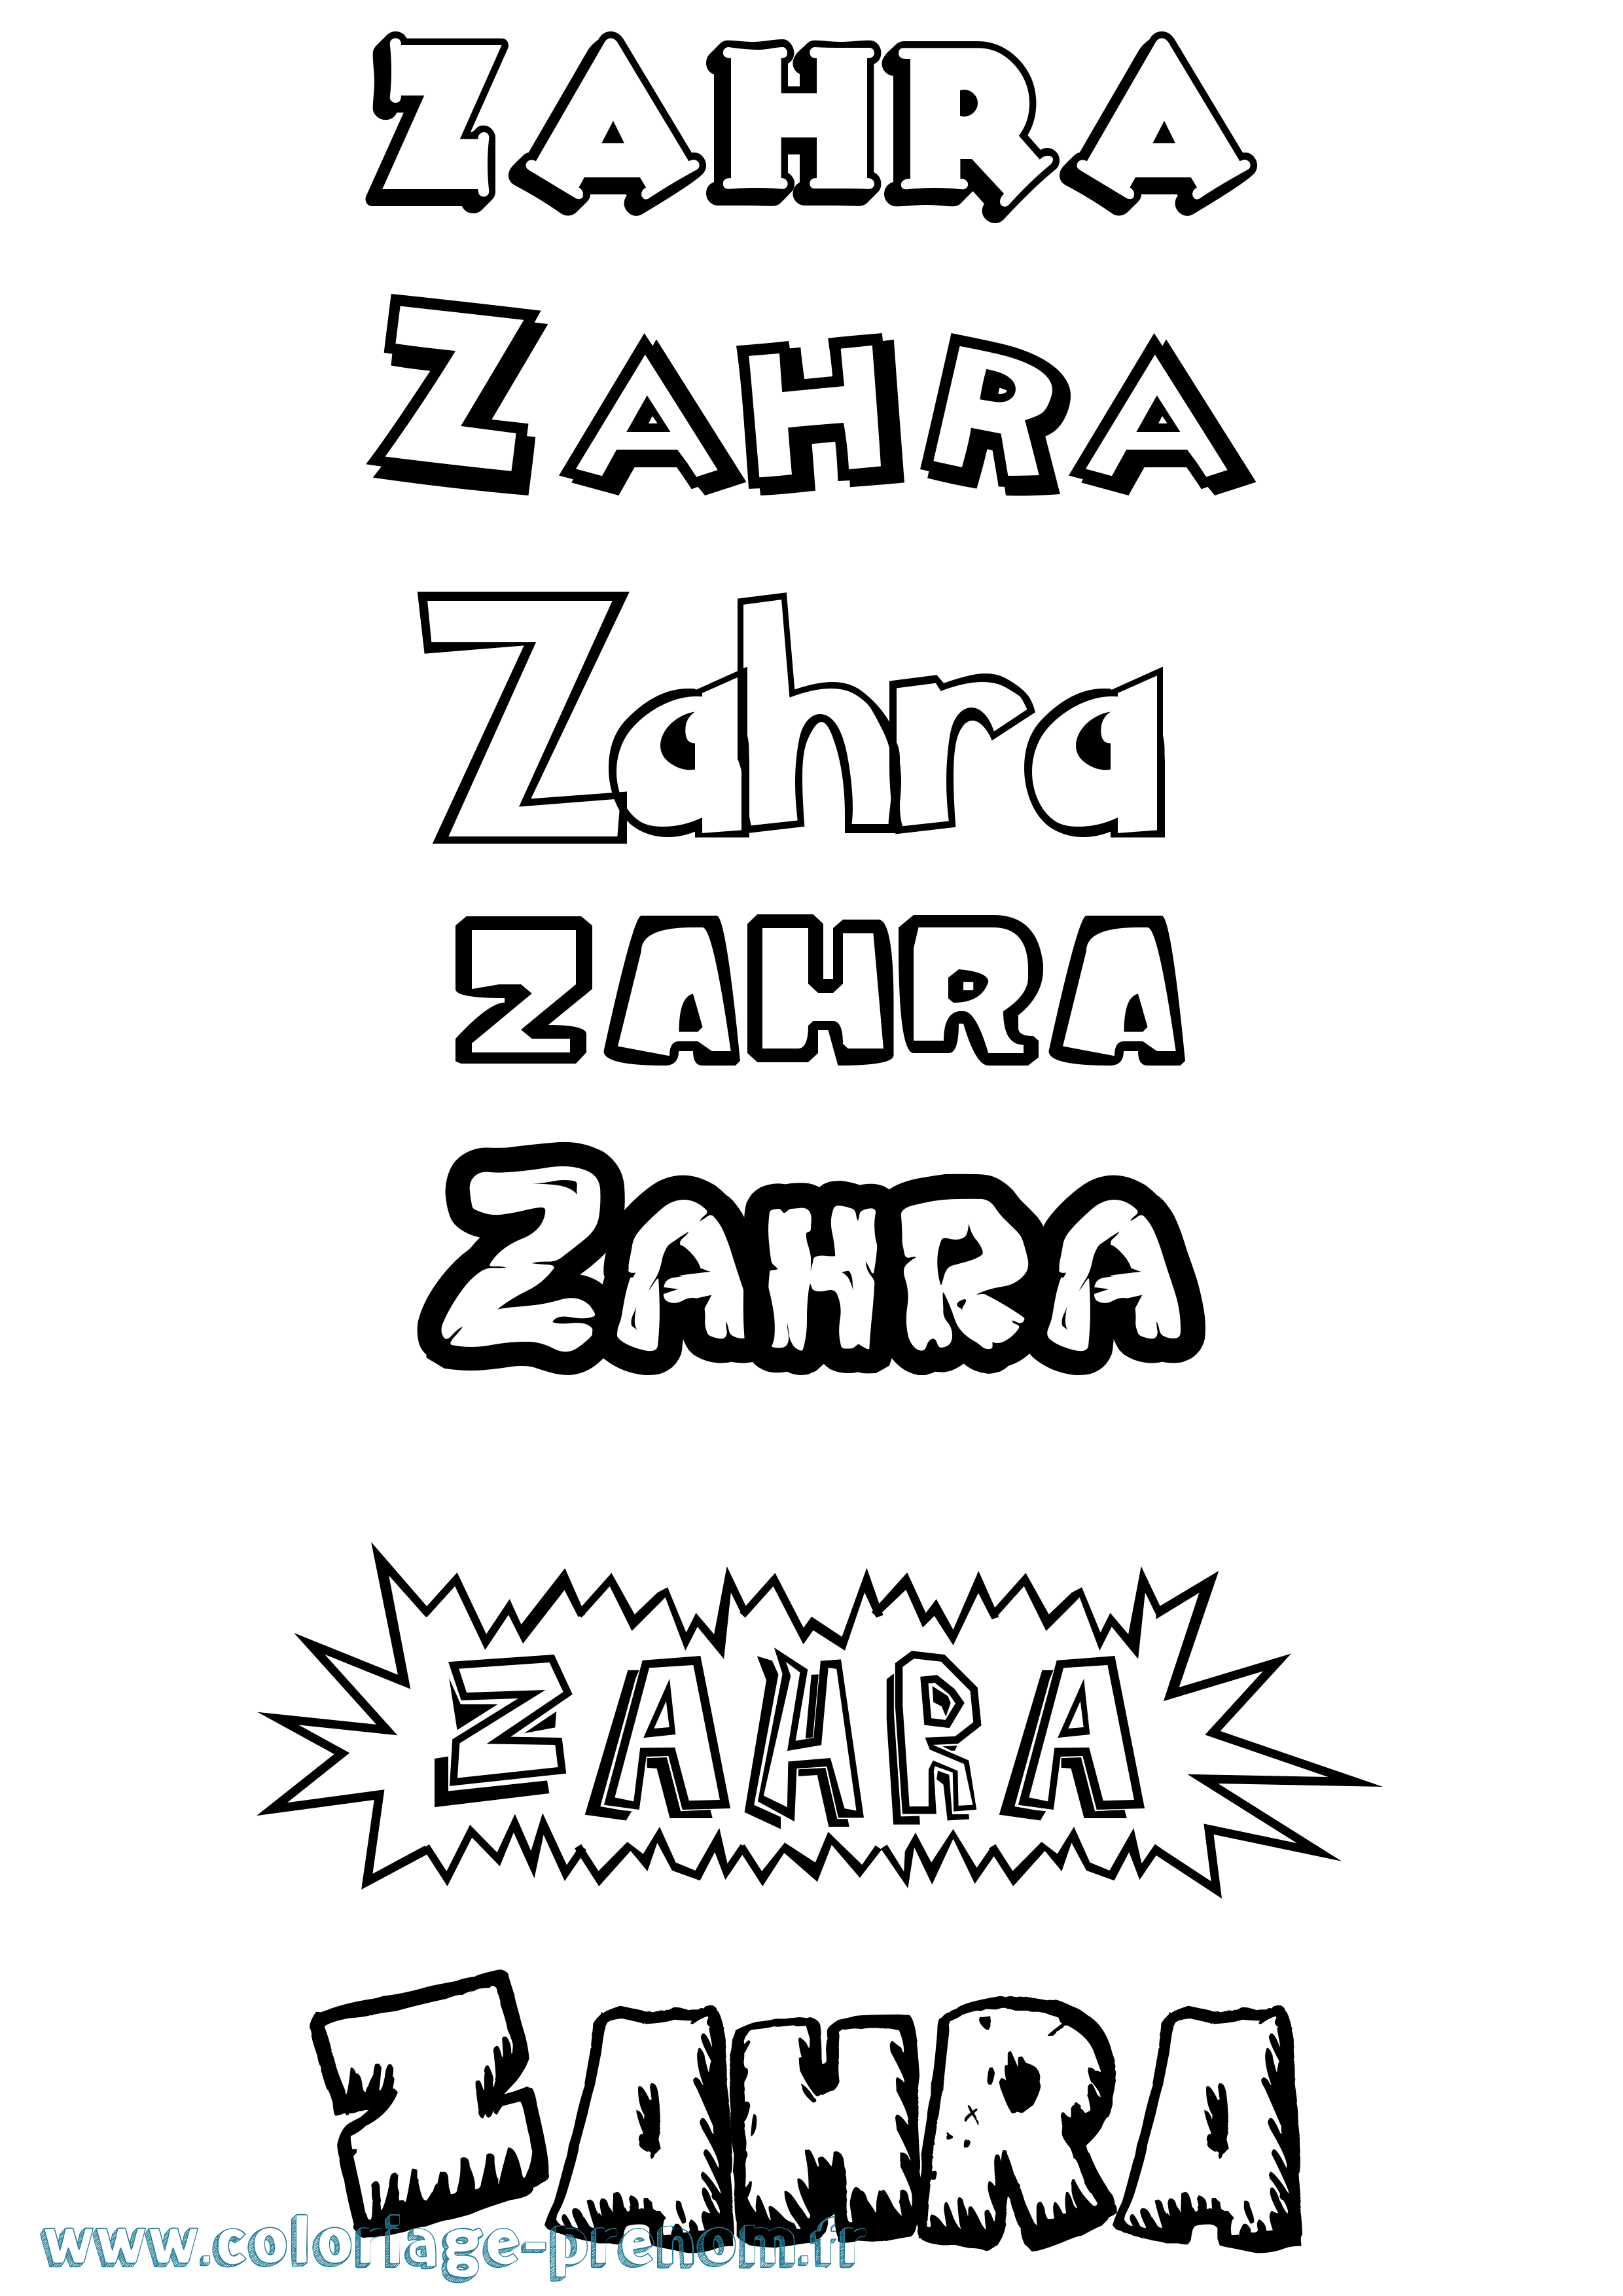 Coloriage prénom Zahra